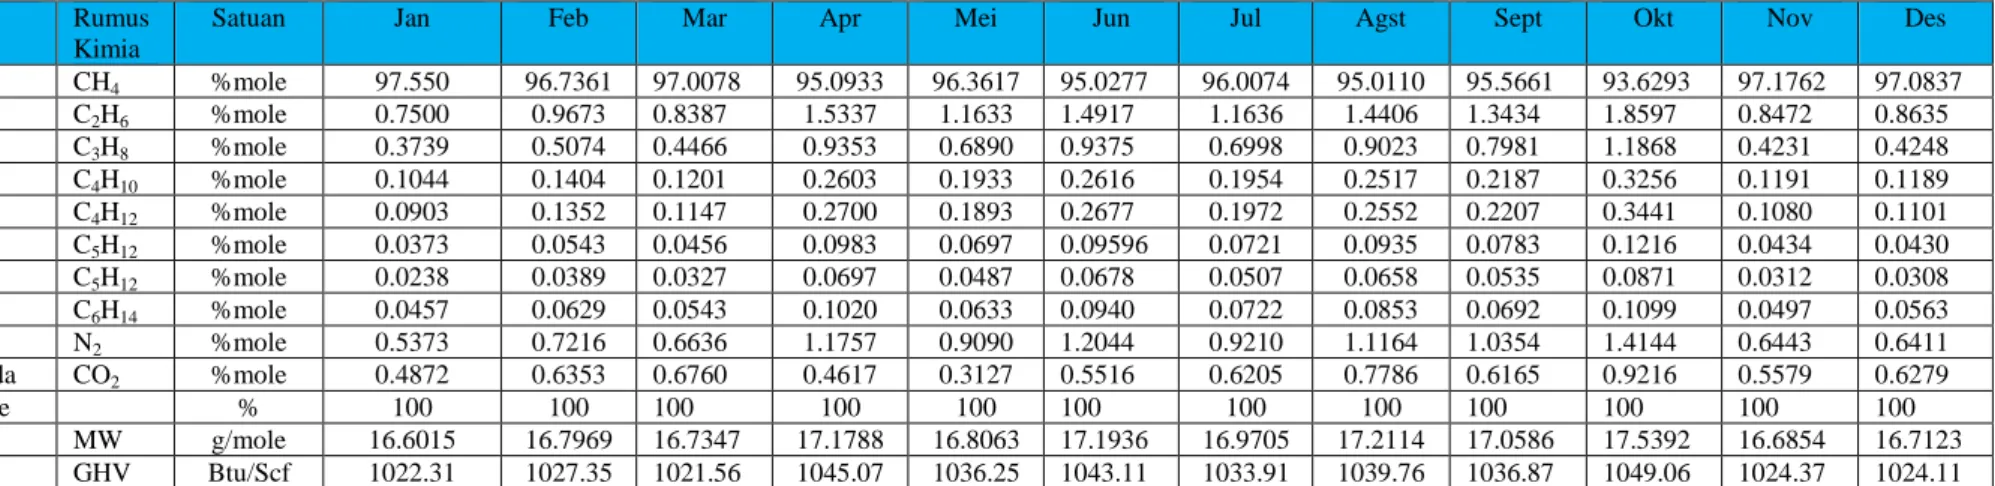 Tabel 11 Data Komposisi Bahan Bakar Gas rata-rata perbulan Periode Tahun 2017-208 (%.Vol) 